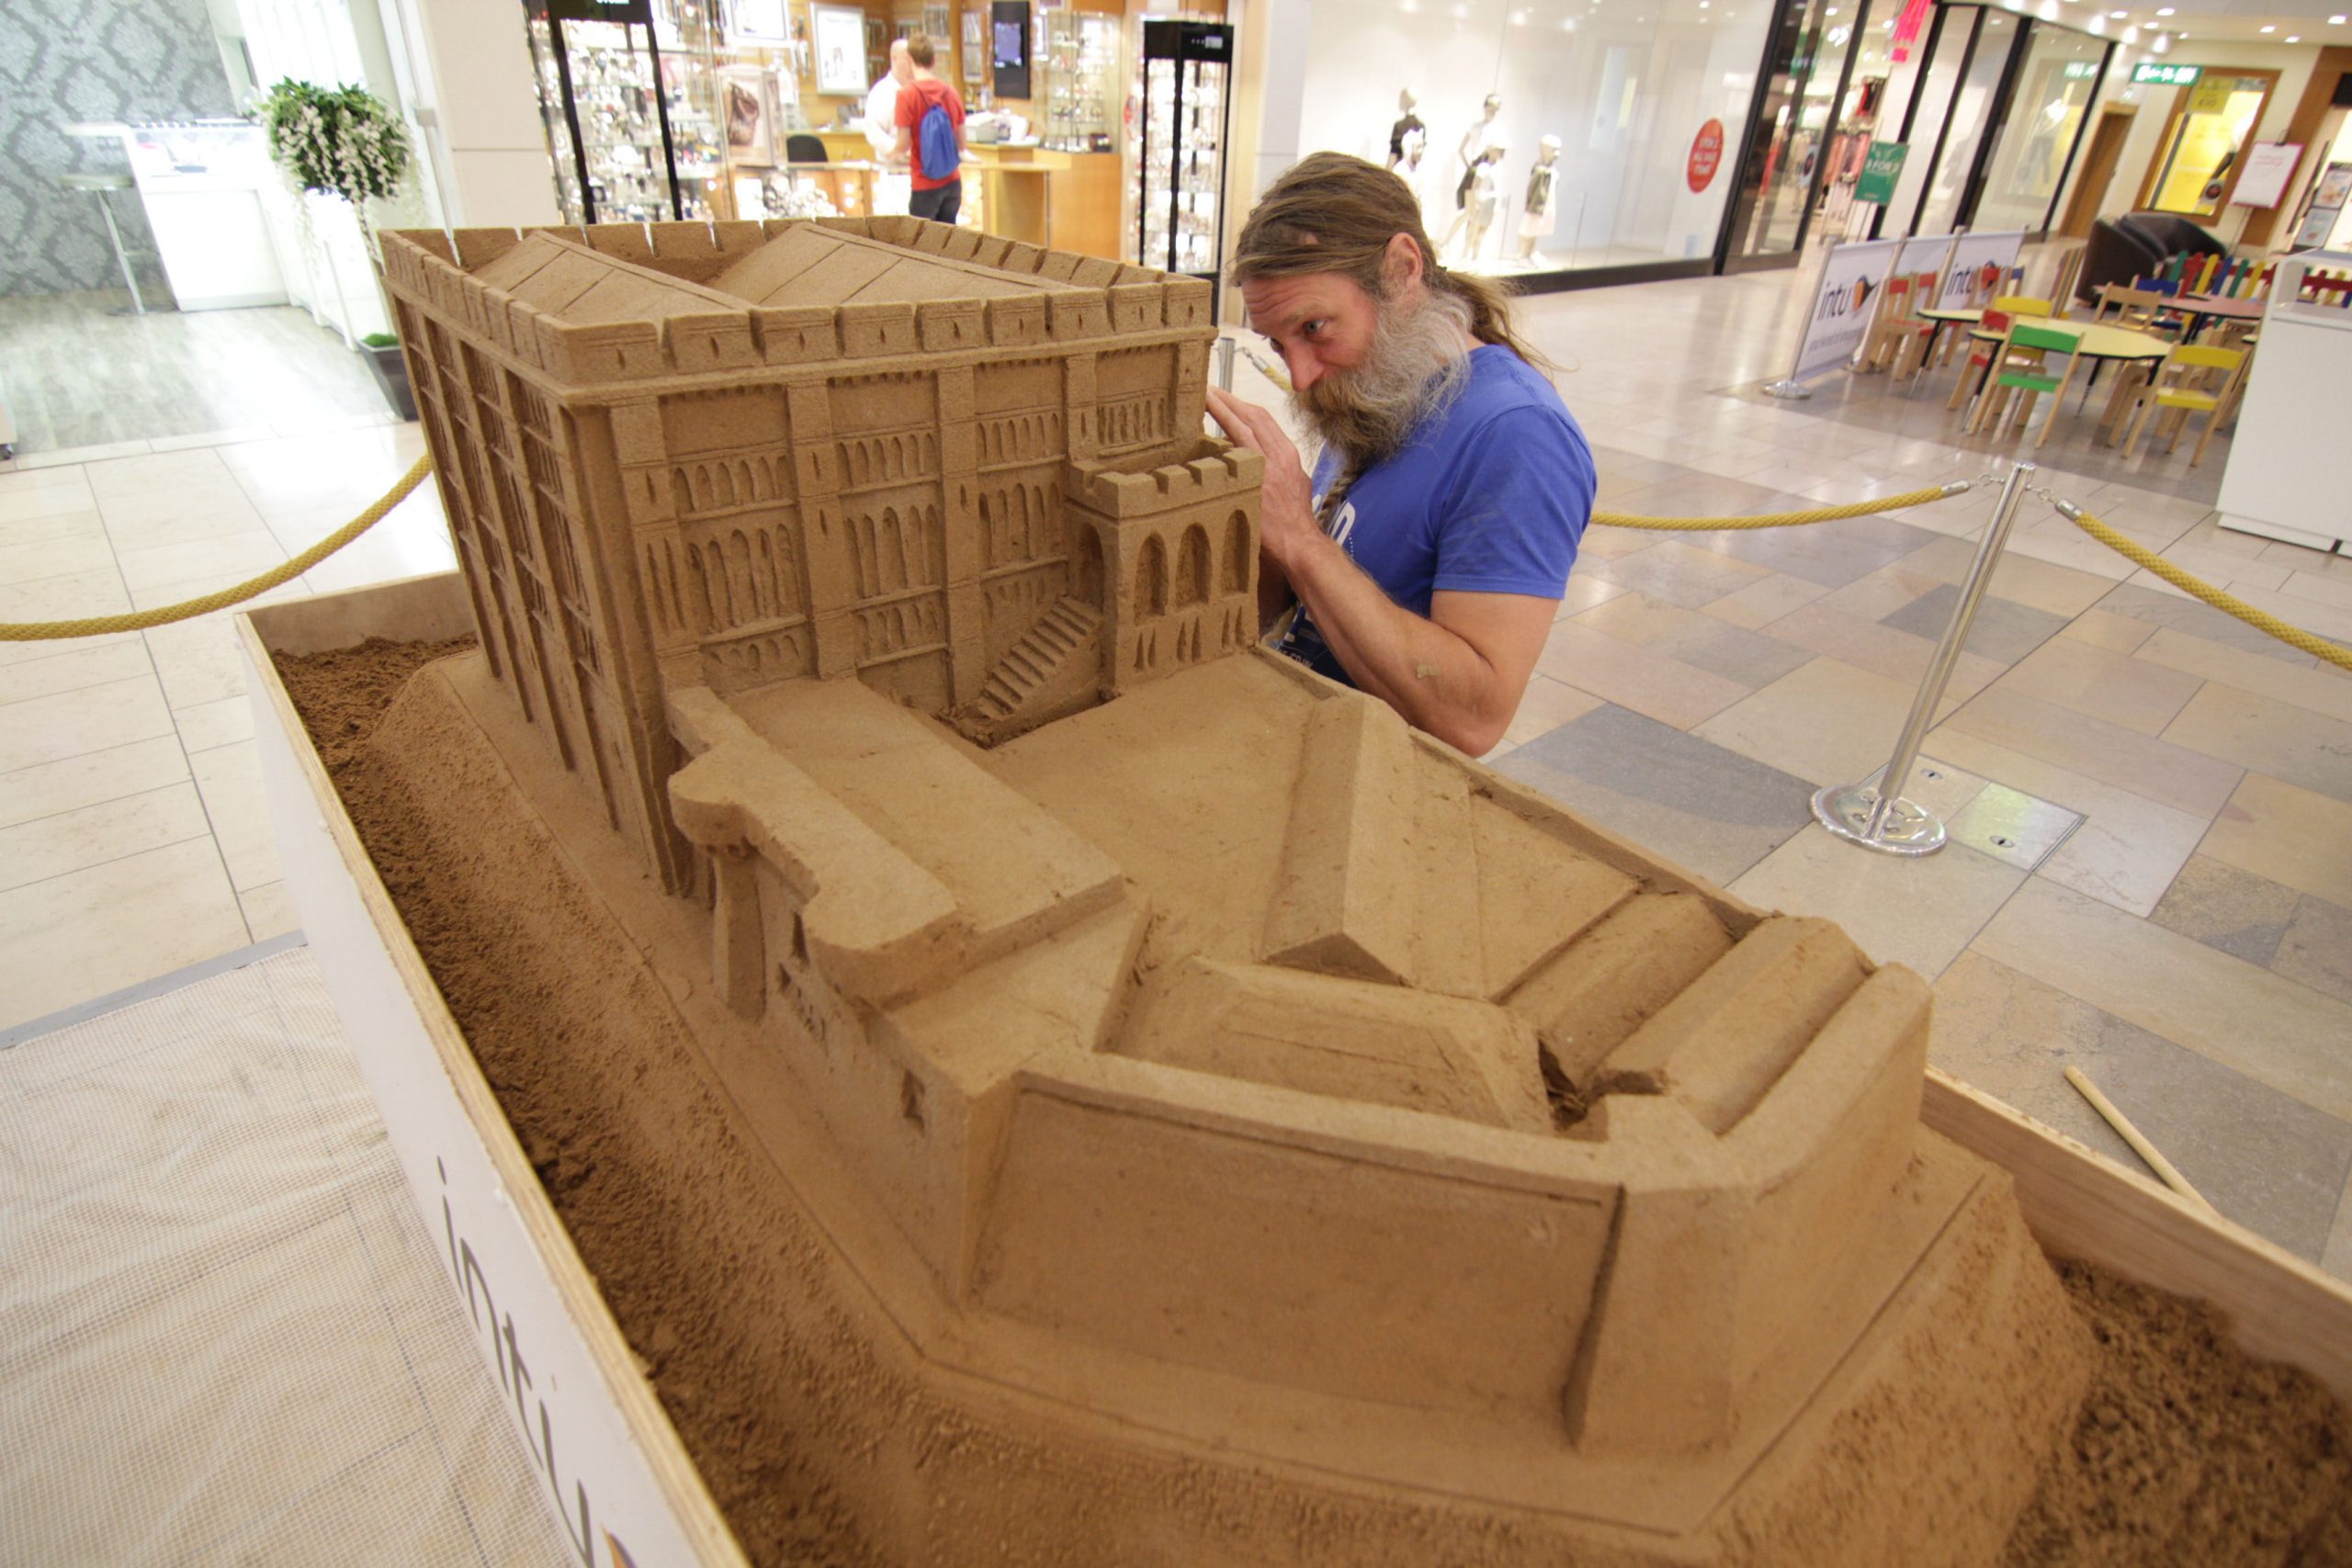 Sand Sculpture of Norwich Castle in Intu Chapelfield shopping centre